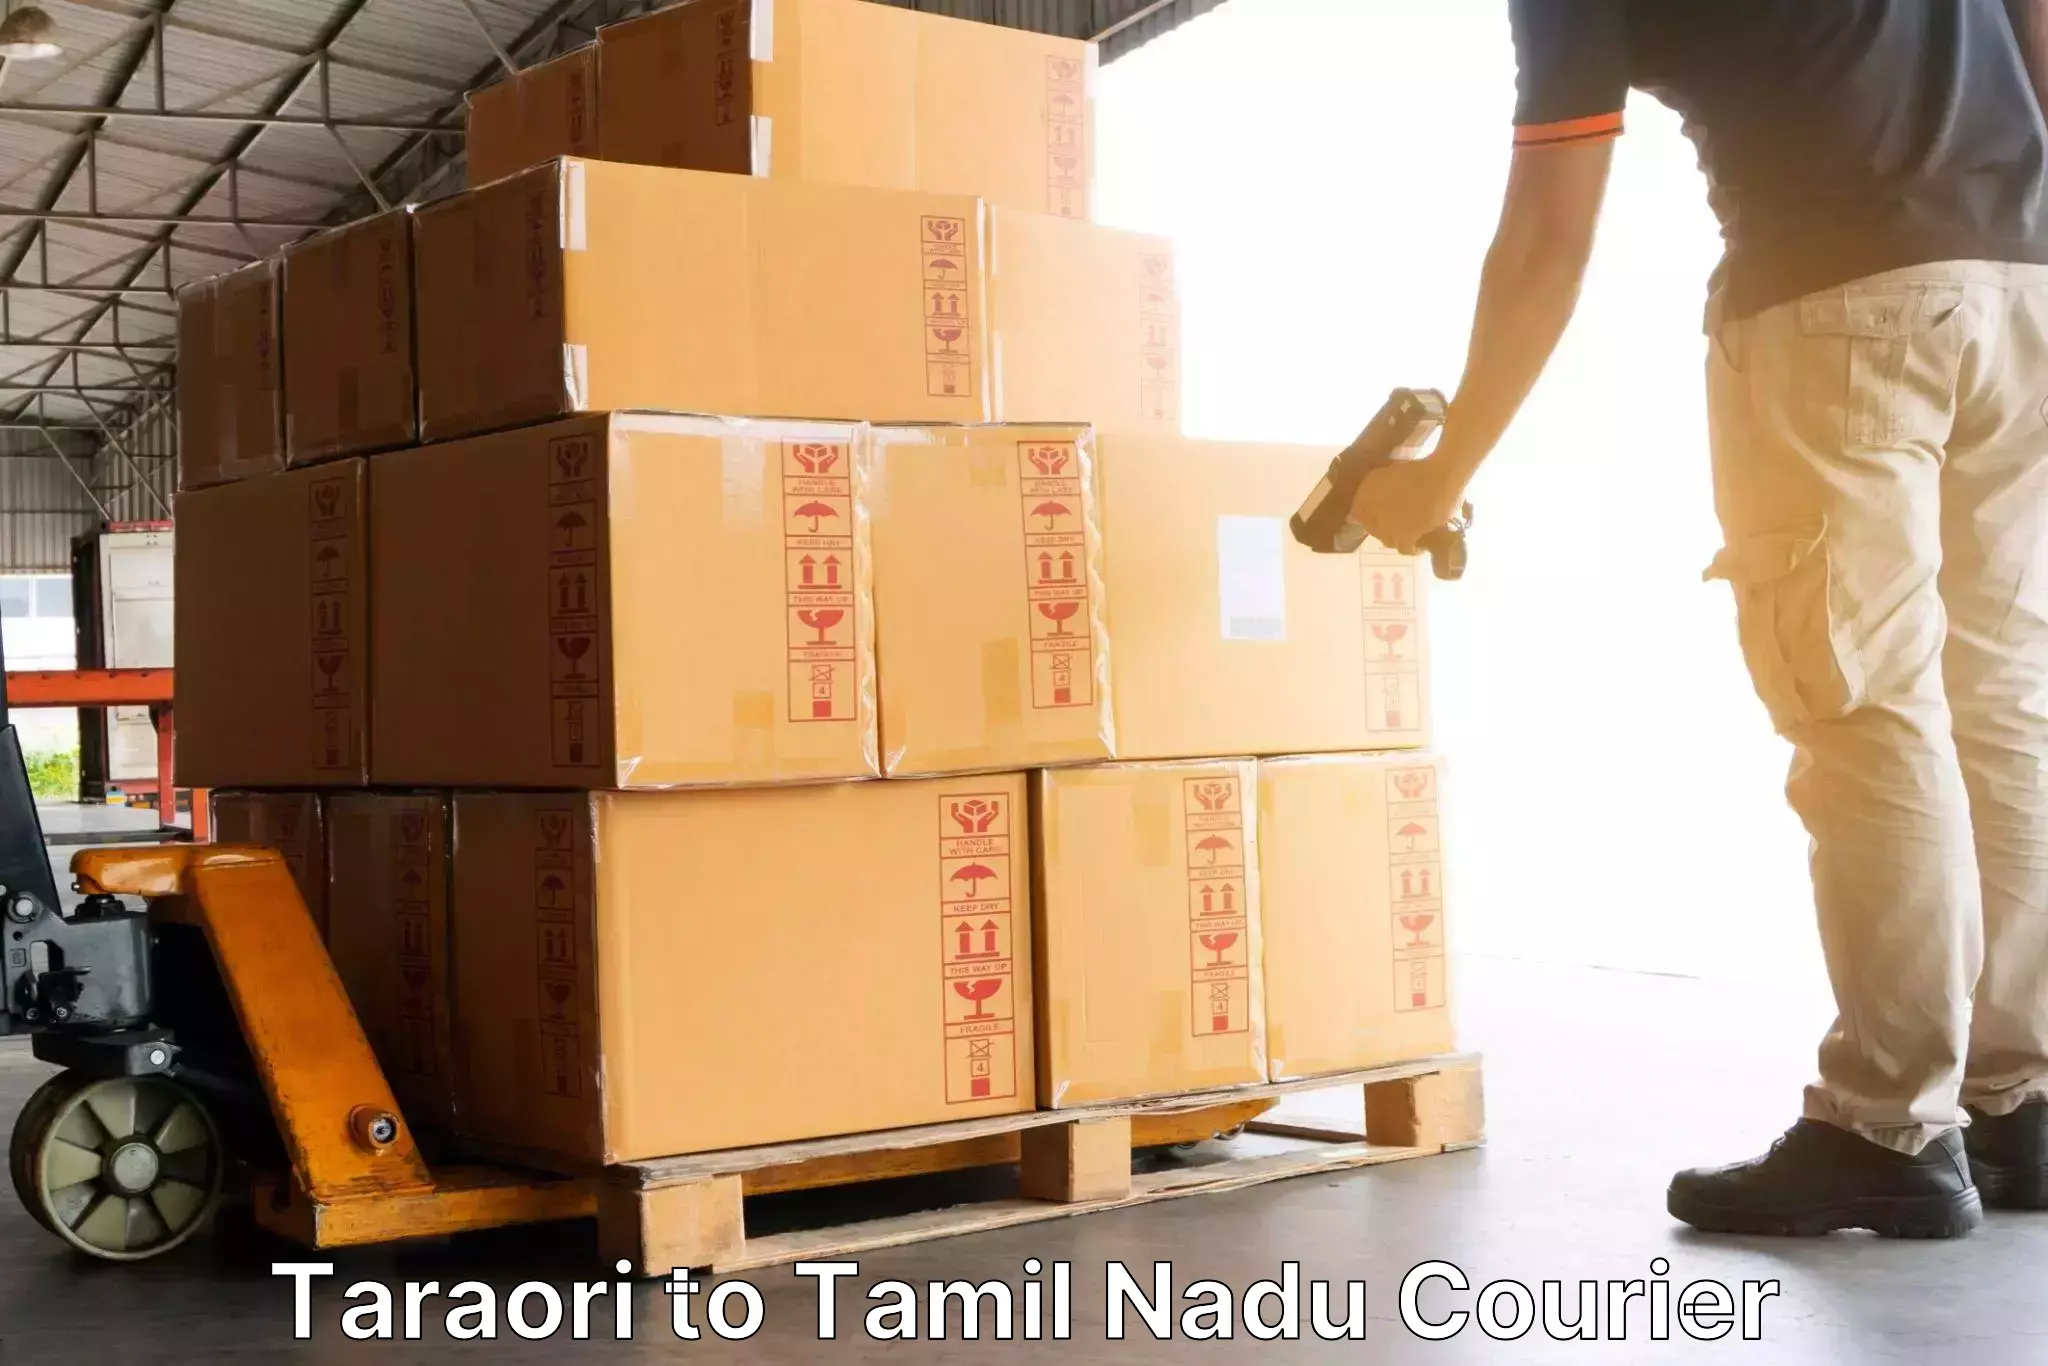 Speedy delivery service Taraori to Sivaganga